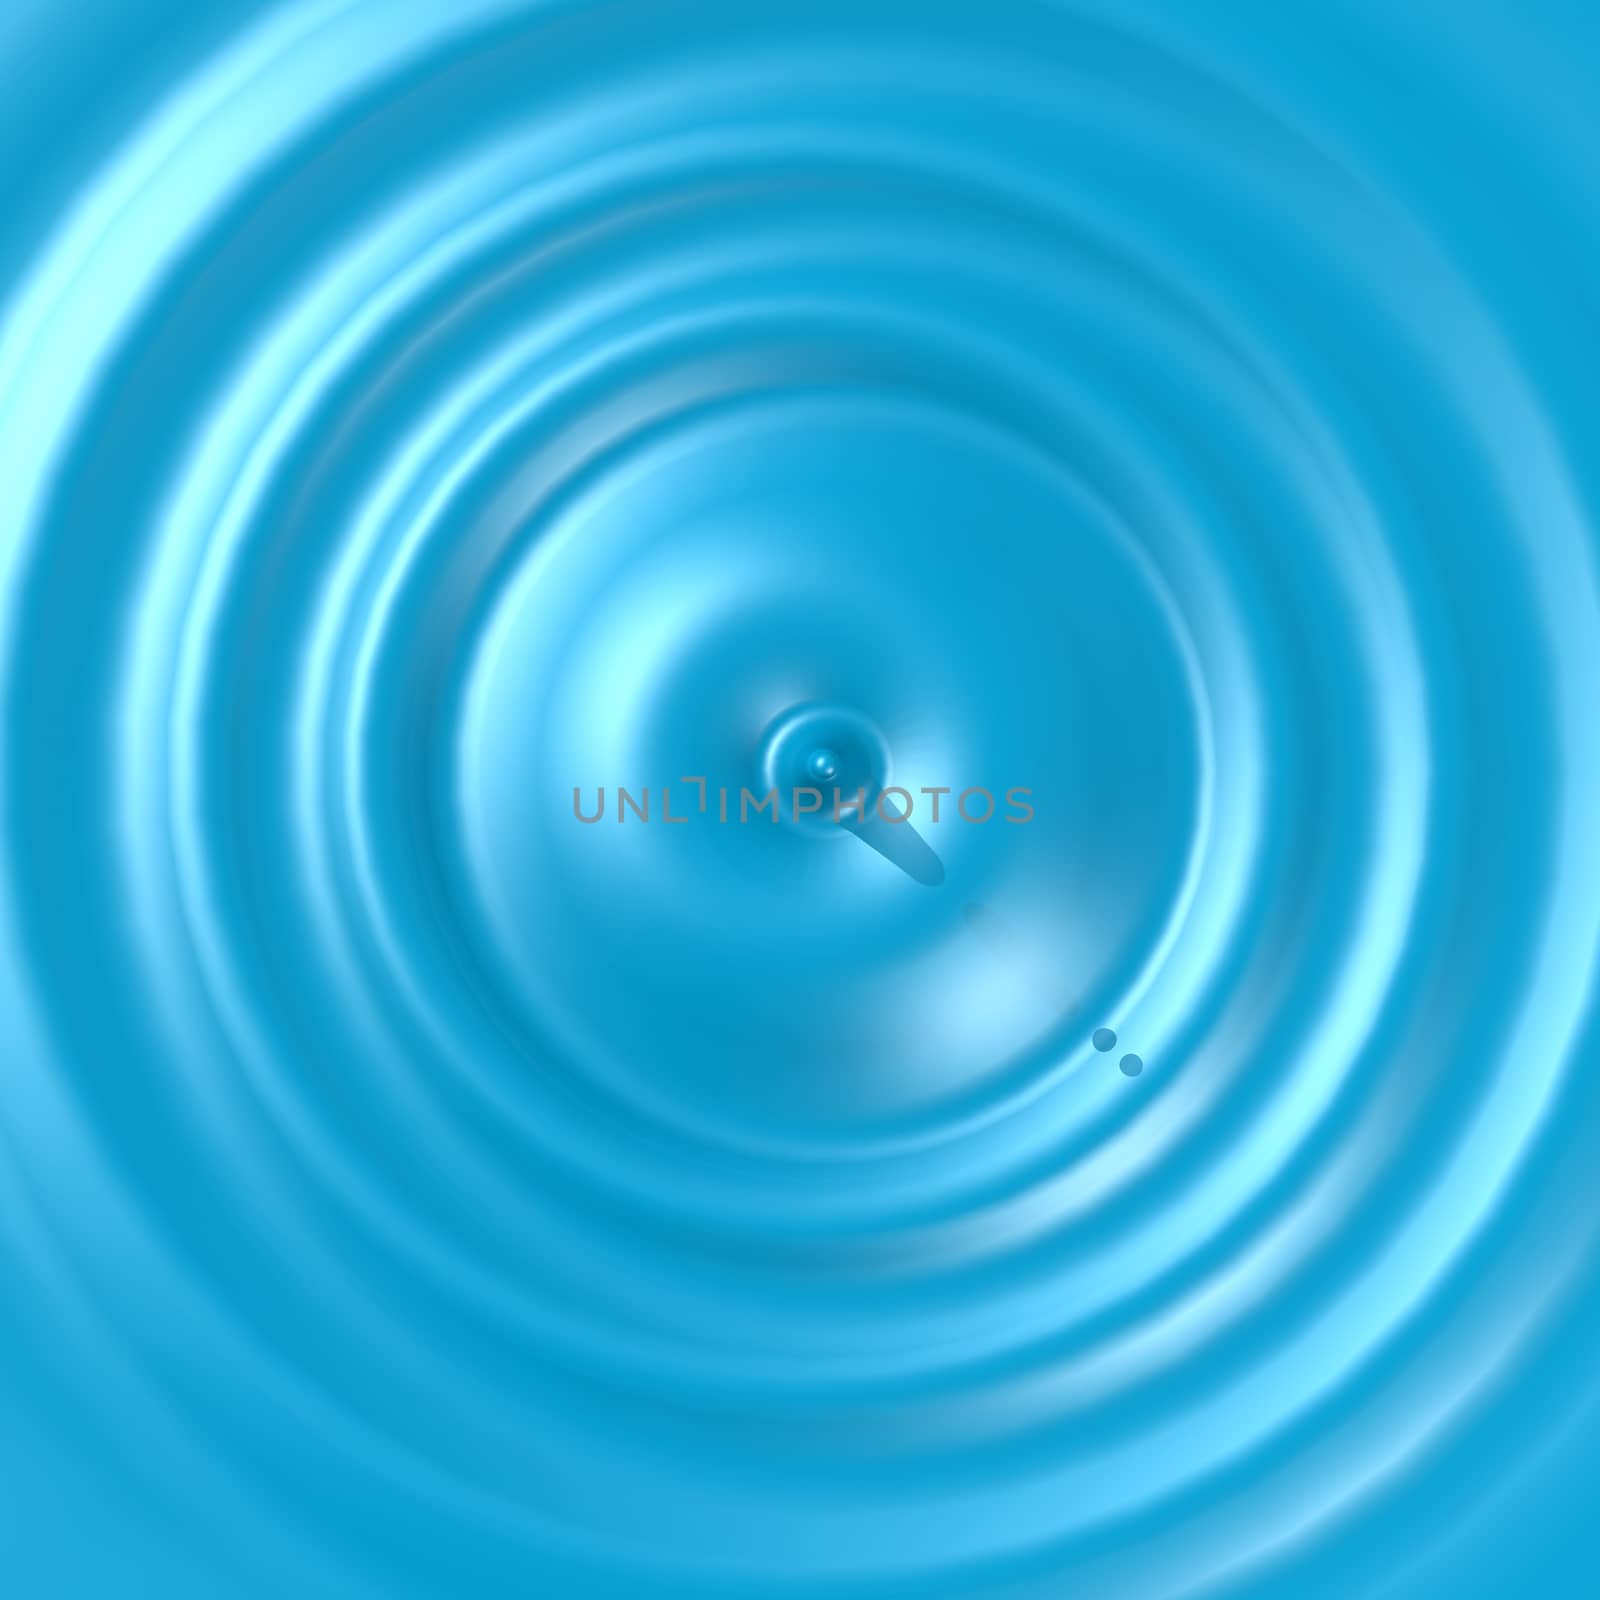 Blue water ripple